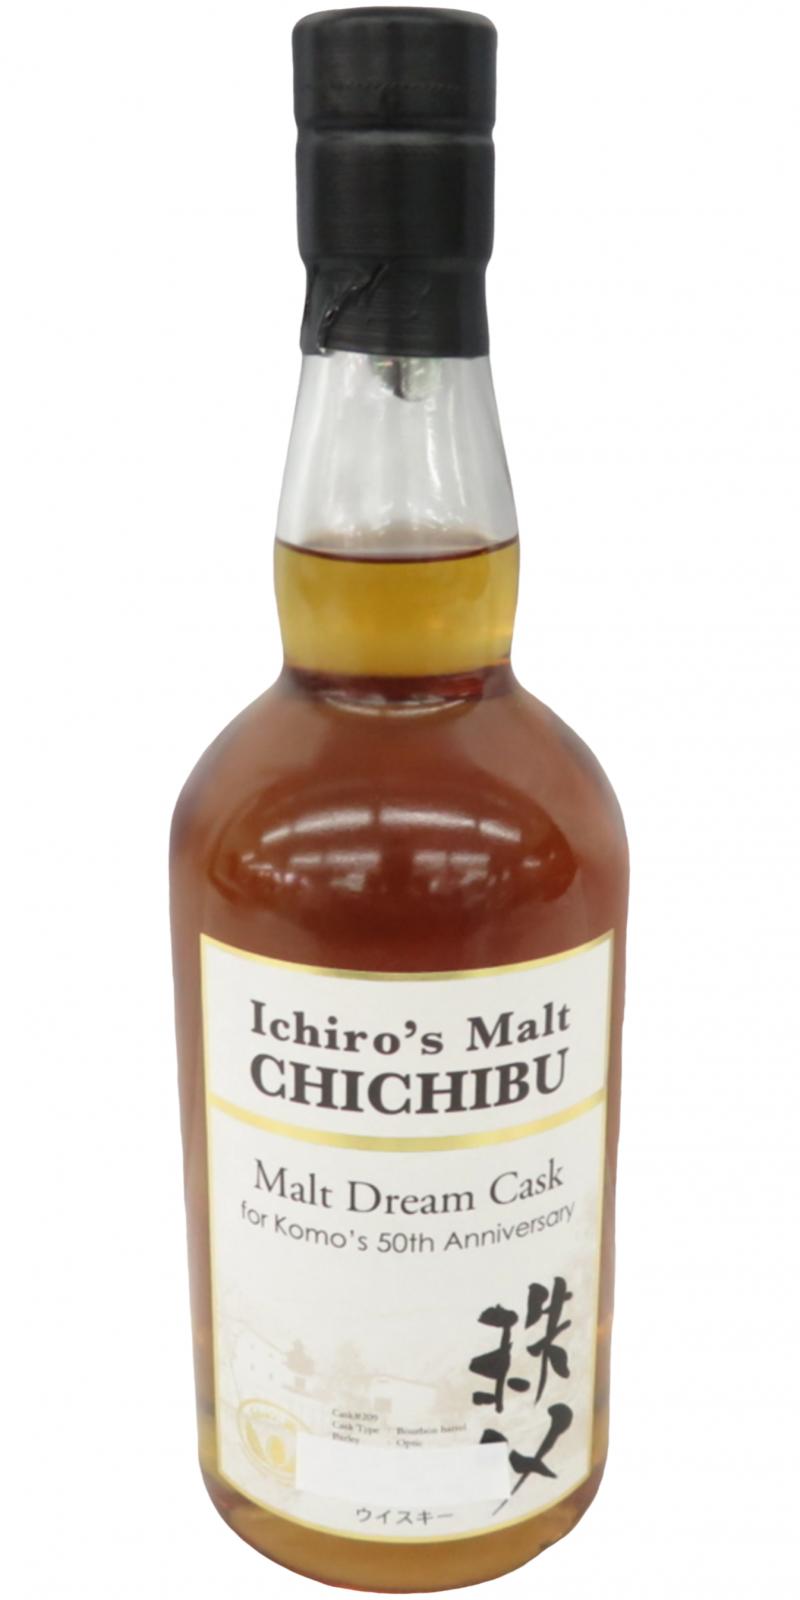 Chichibu 2008 Malt Dream Cask Bourbon Barrel #209 Komo's 50th Anniversary 60.8% 700ml